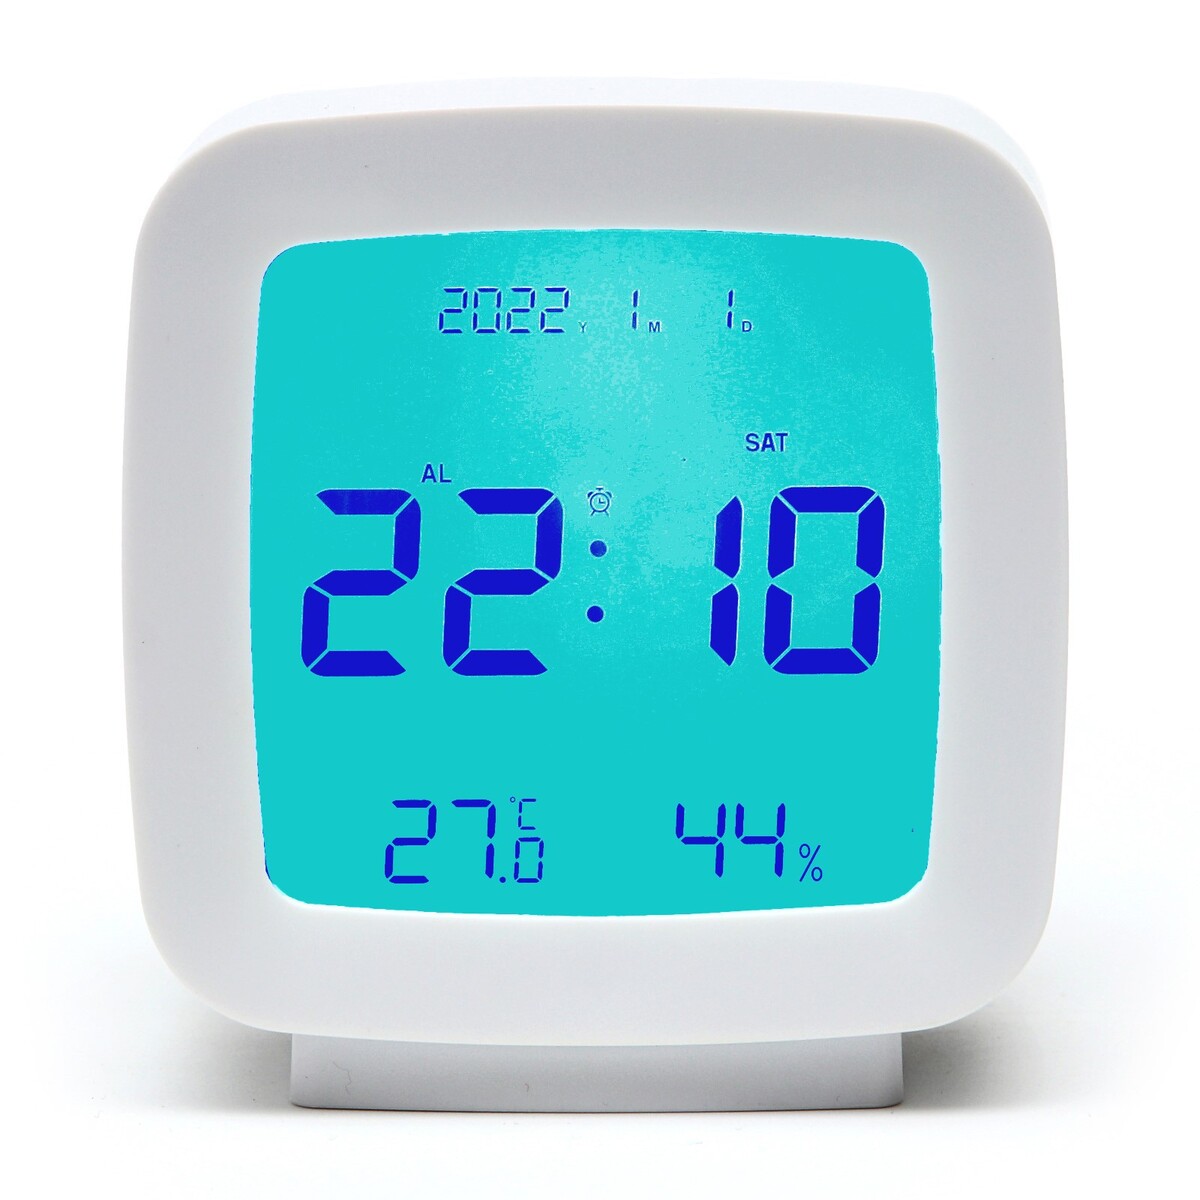 Часы - будильник электронные настольные: термометр, календарь, гигрометр, 7.8 х 8.3 см часы электронные настольные c термометром гигрометром 7 х 14 5 х 4 см